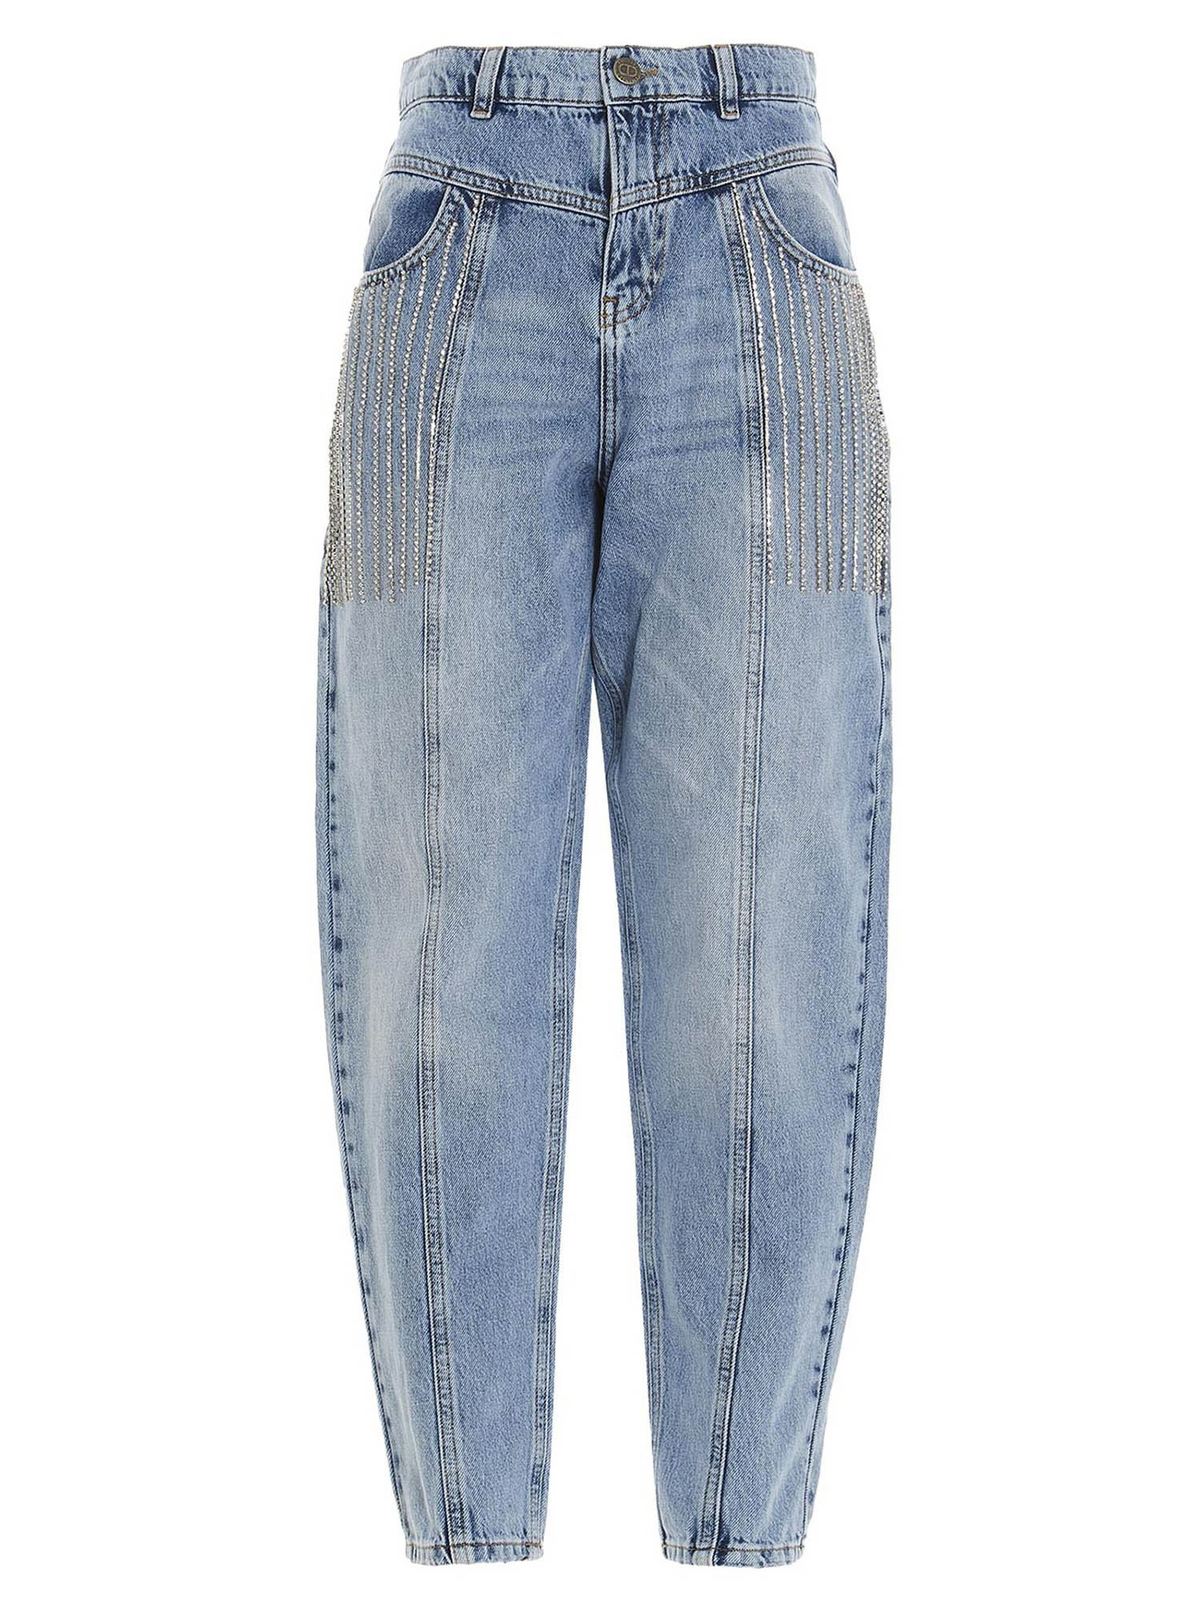 Twinset - Rhinestone fringes carrot jeans in light blue - straight leg ...